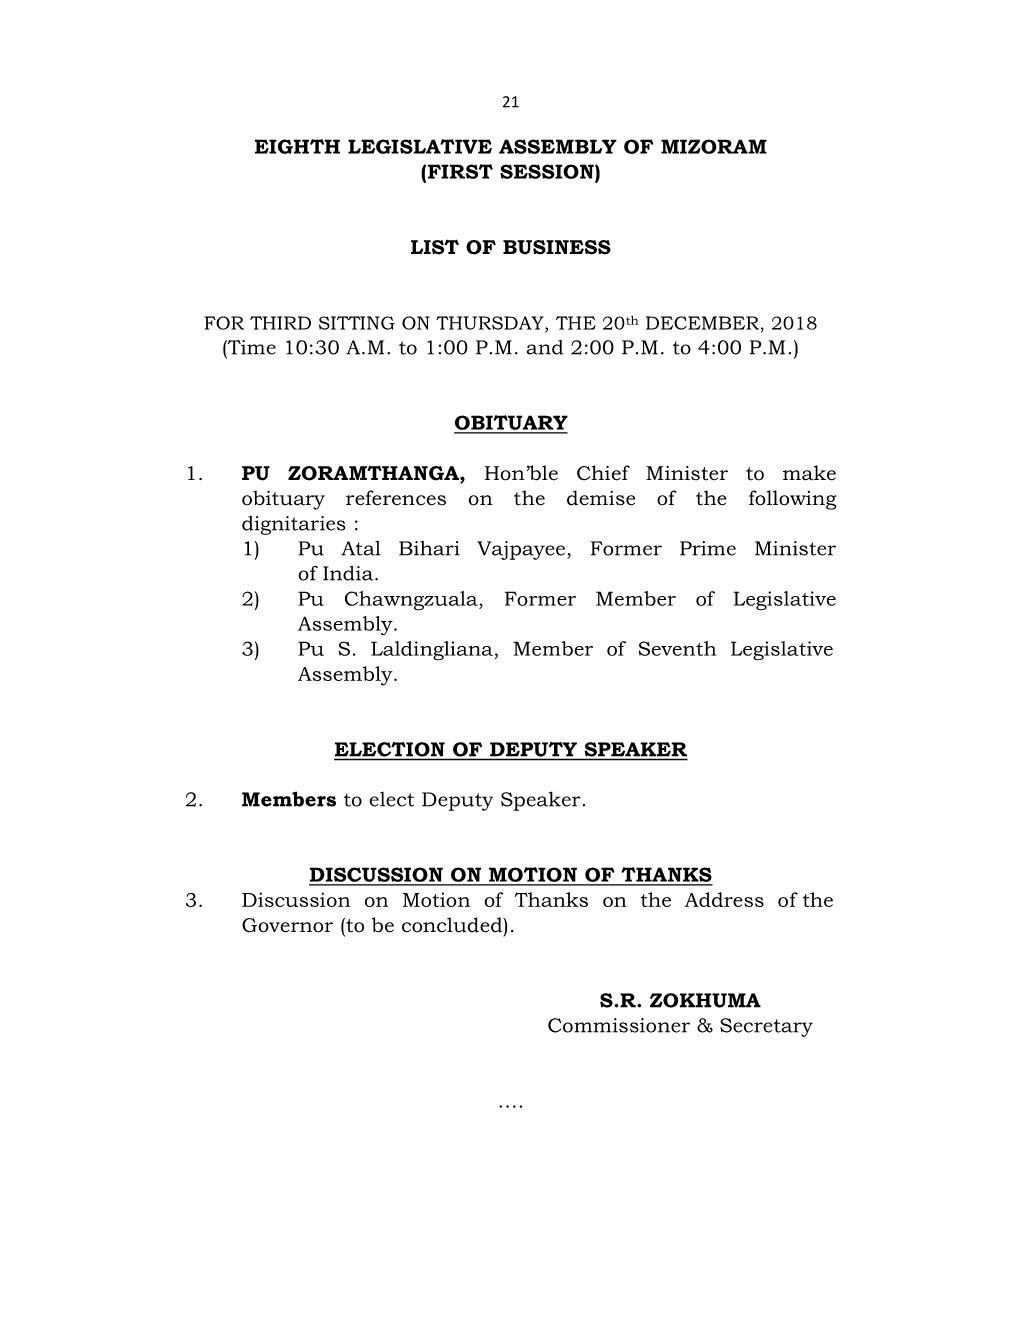 Eighth Legislative Assembly of Mizoram (First Session)